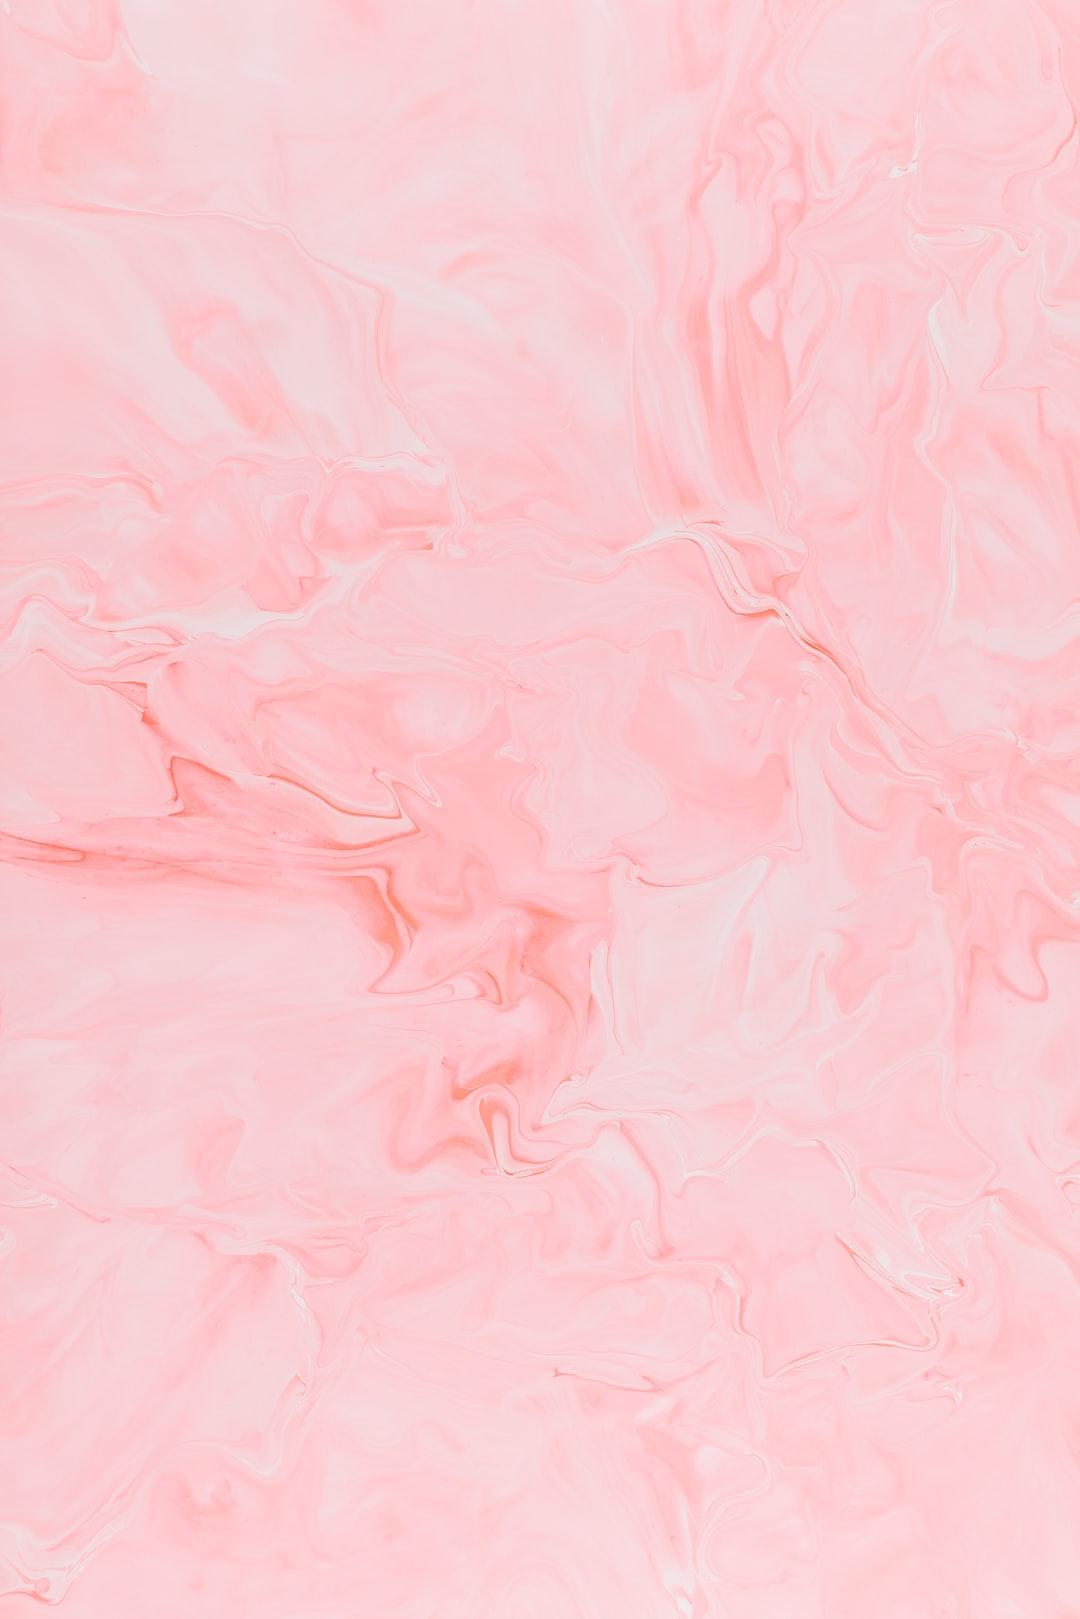 25+] Pastel Pink 4K Wallpapers - WallpaperSafari